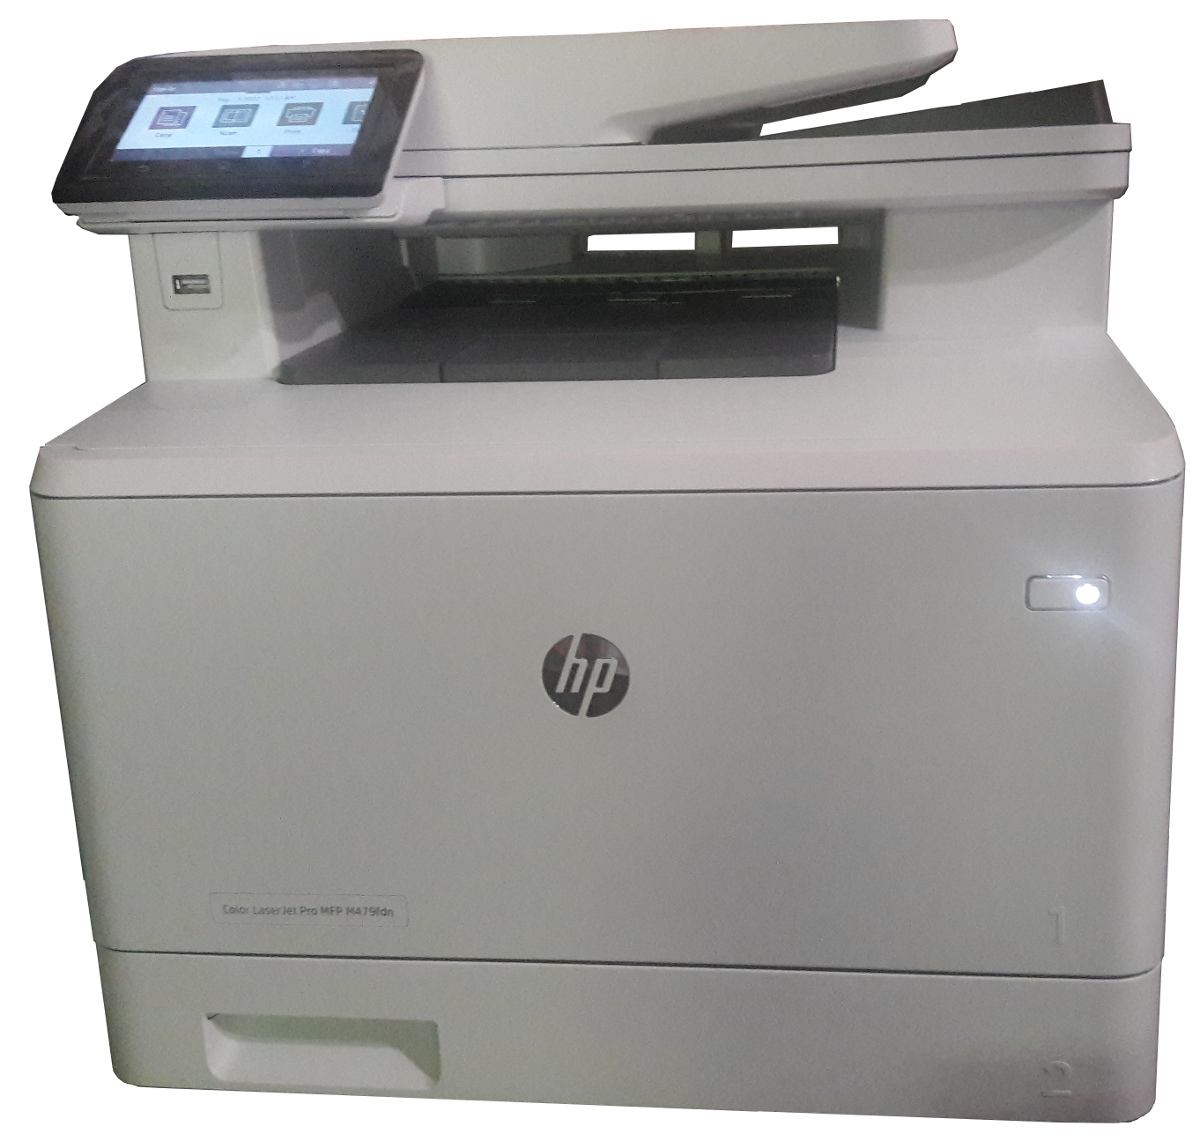 My new M479nfd printer, scanner, fax